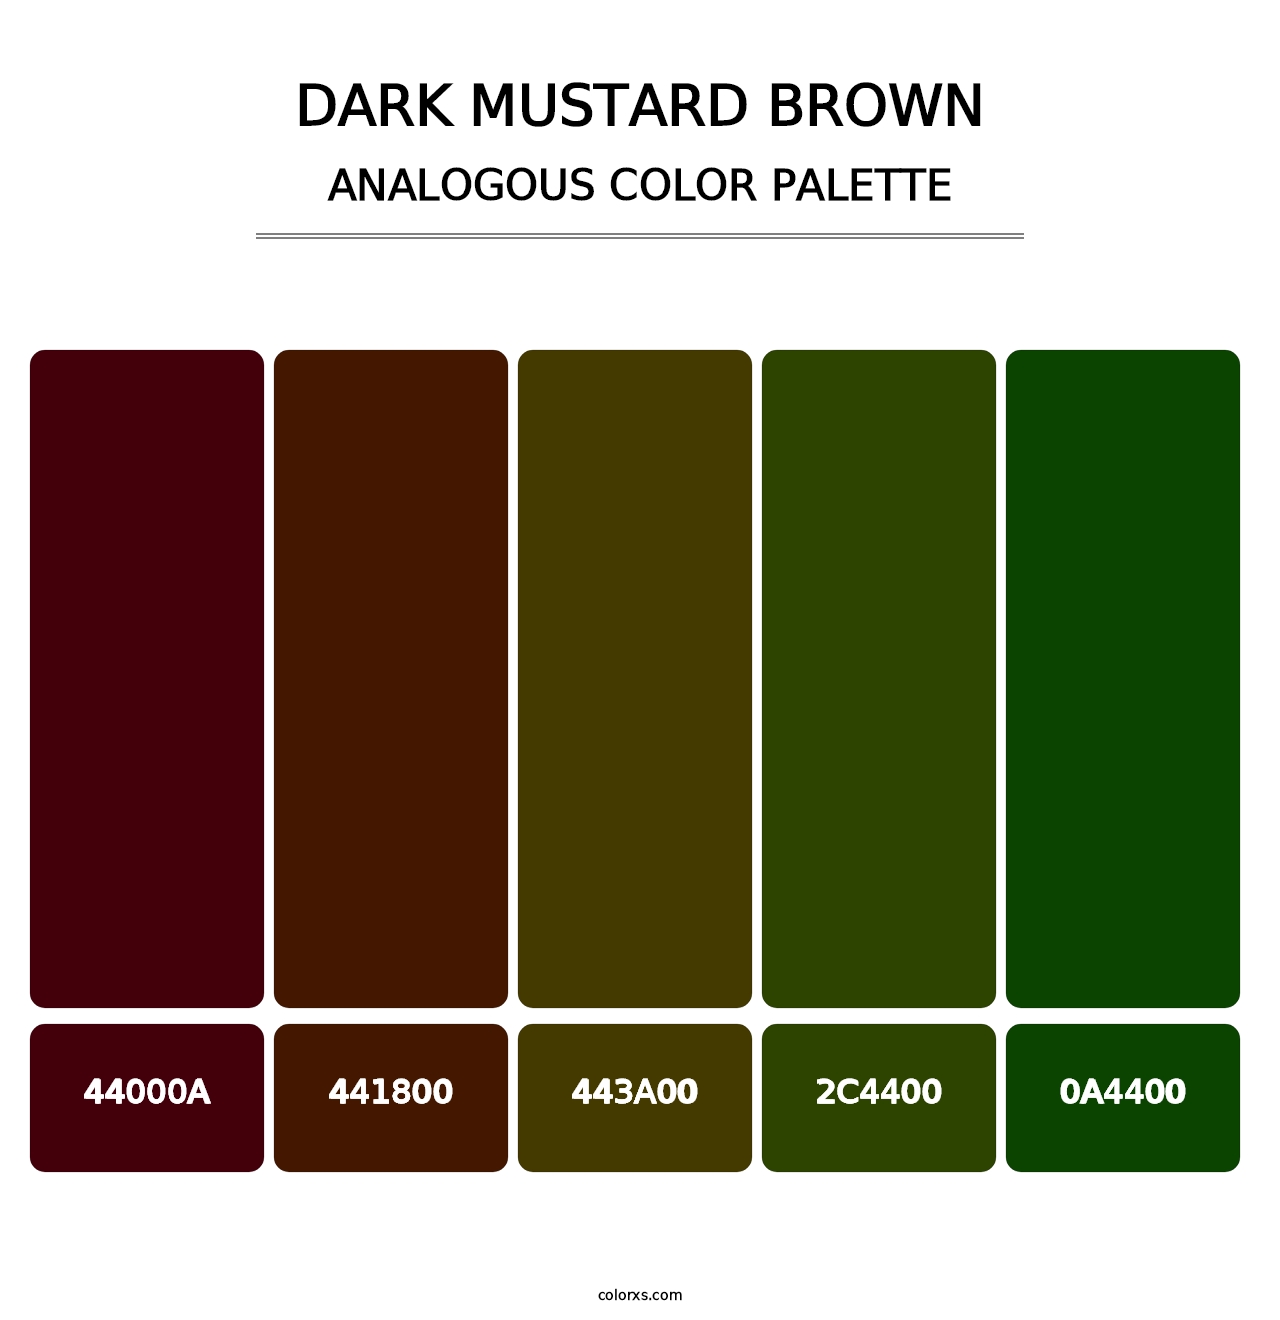 Dark Mustard Brown - Analogous Color Palette